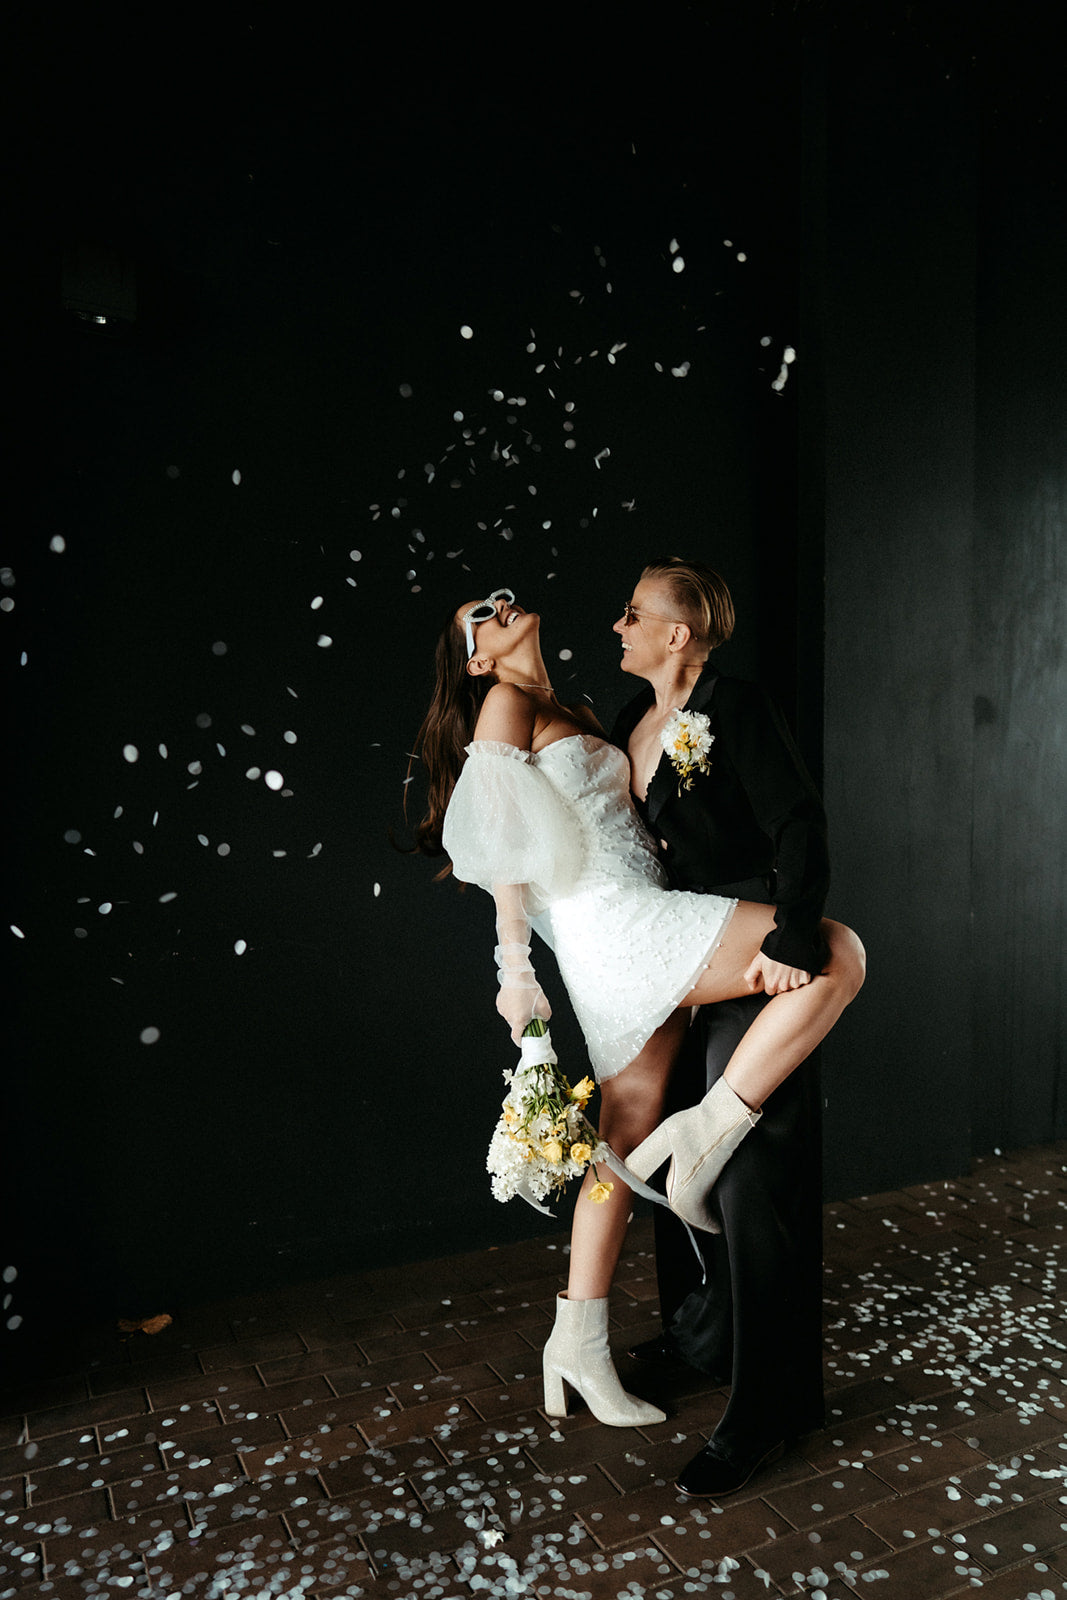 Confetti Mini Bridal Dress